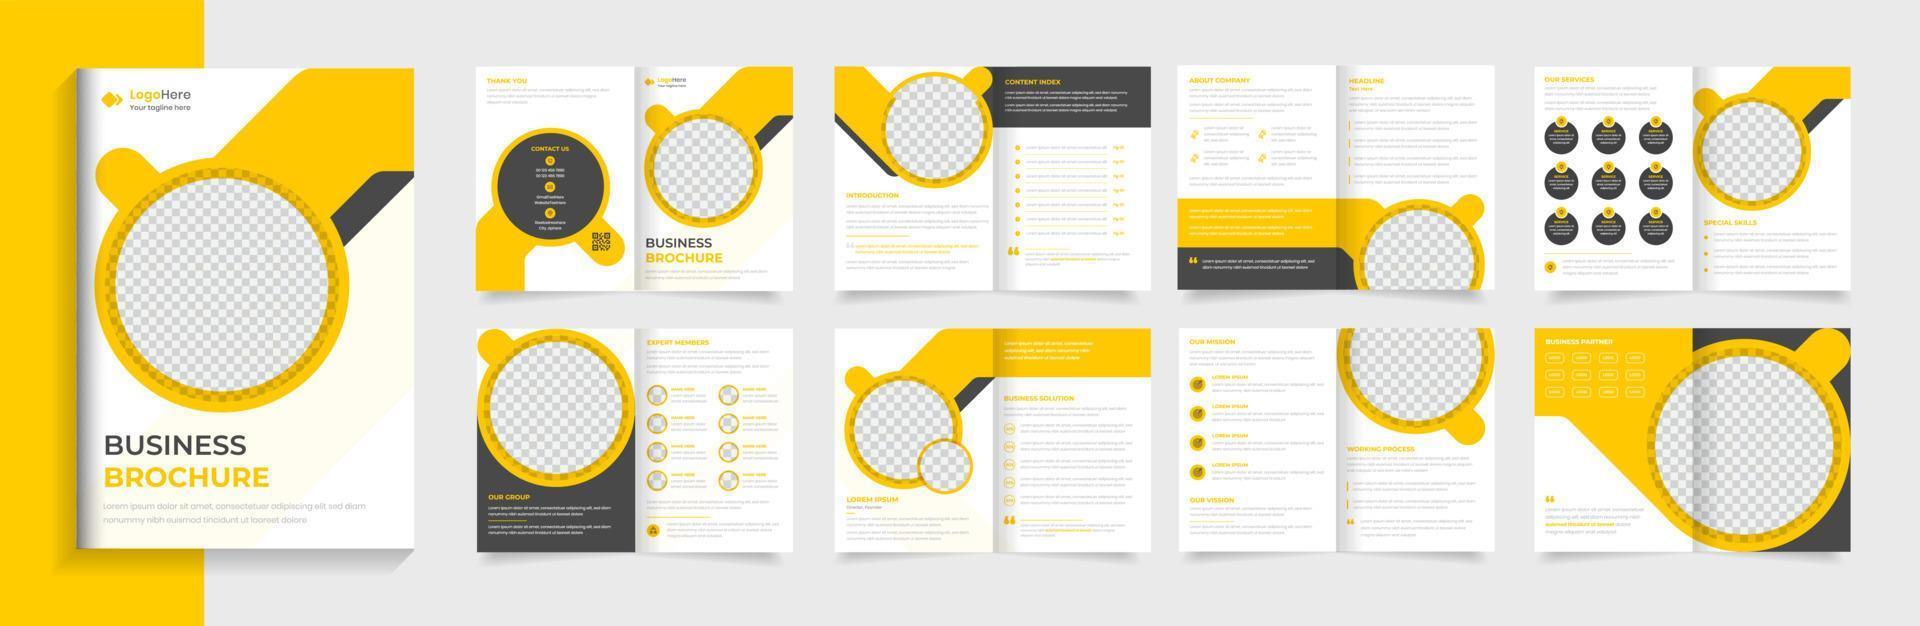 Creative Corporate brochure design template, company profile business multipage layout vector